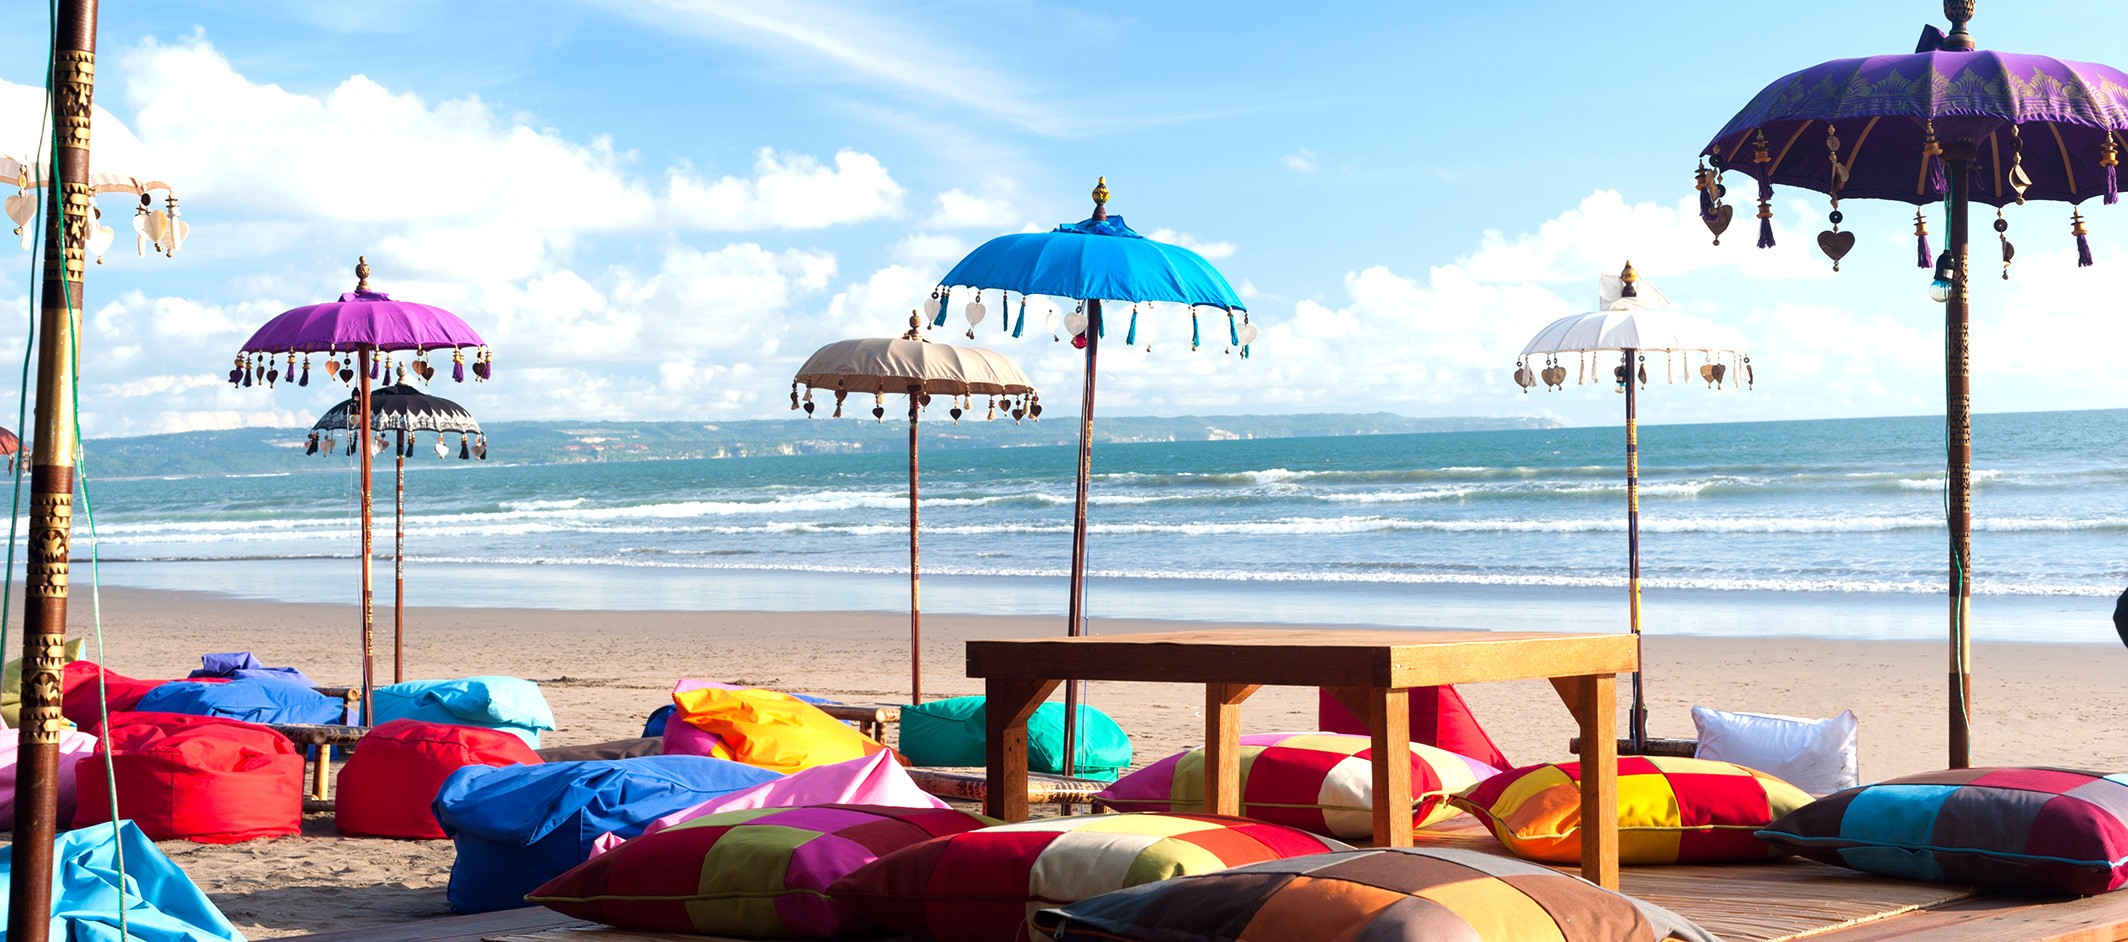 Kuta Beach Bali: Tropical Paradise